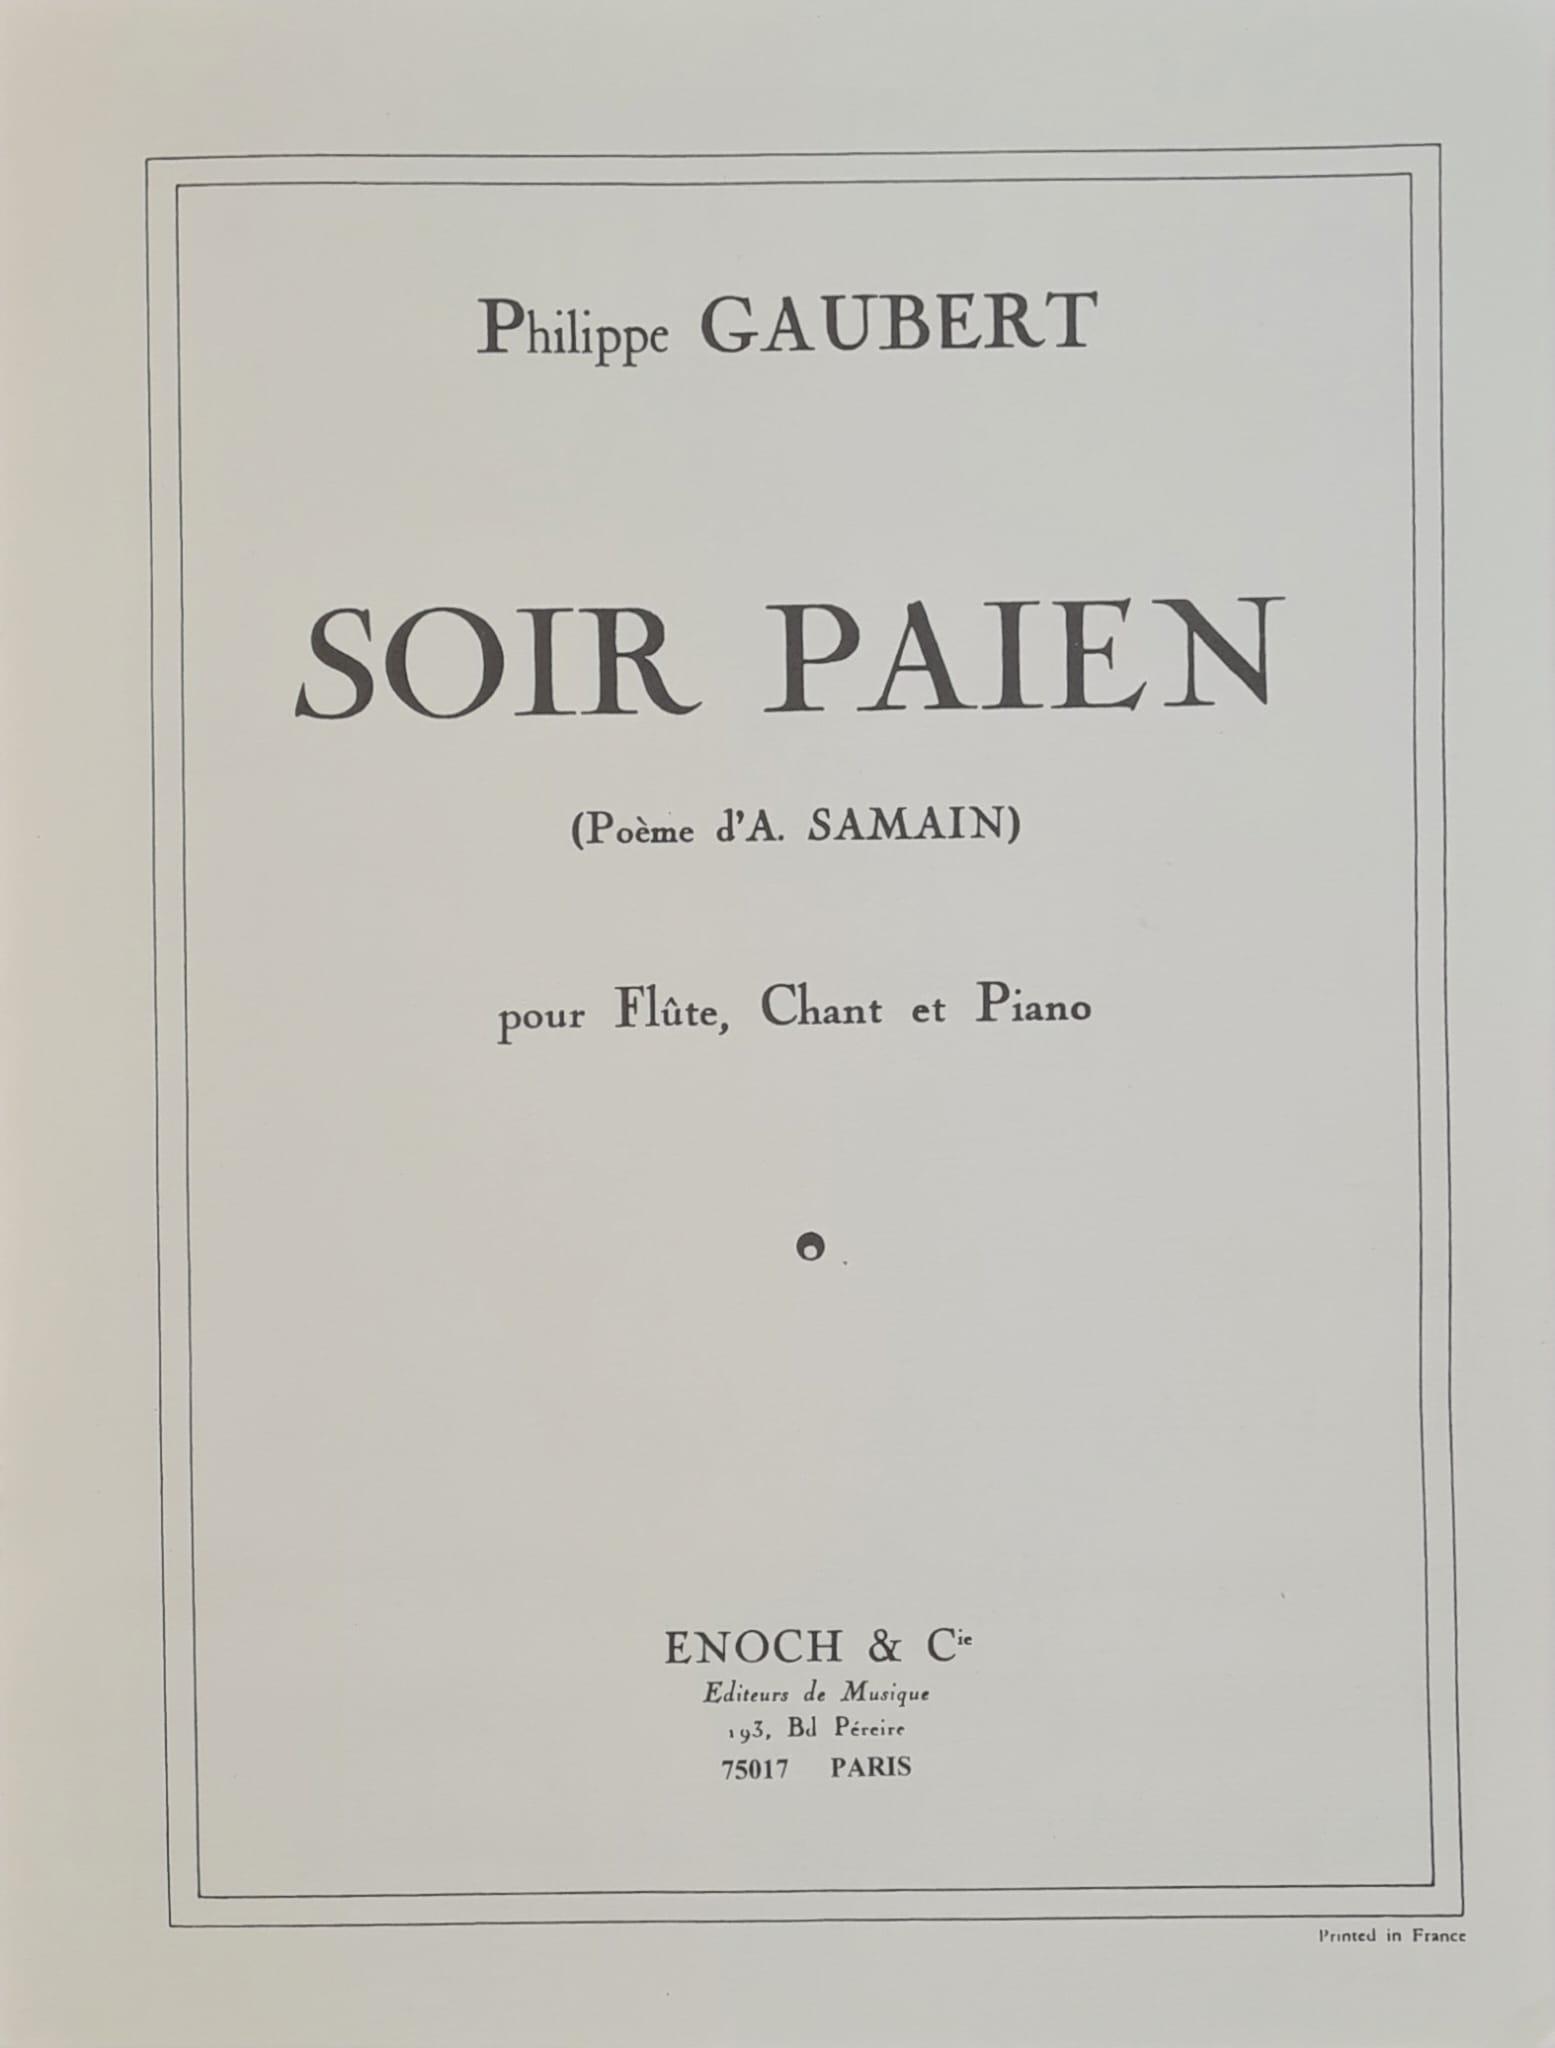 Soir païen, poème d'Albert Samain, Philippe GAUBERT | Suono Flauti